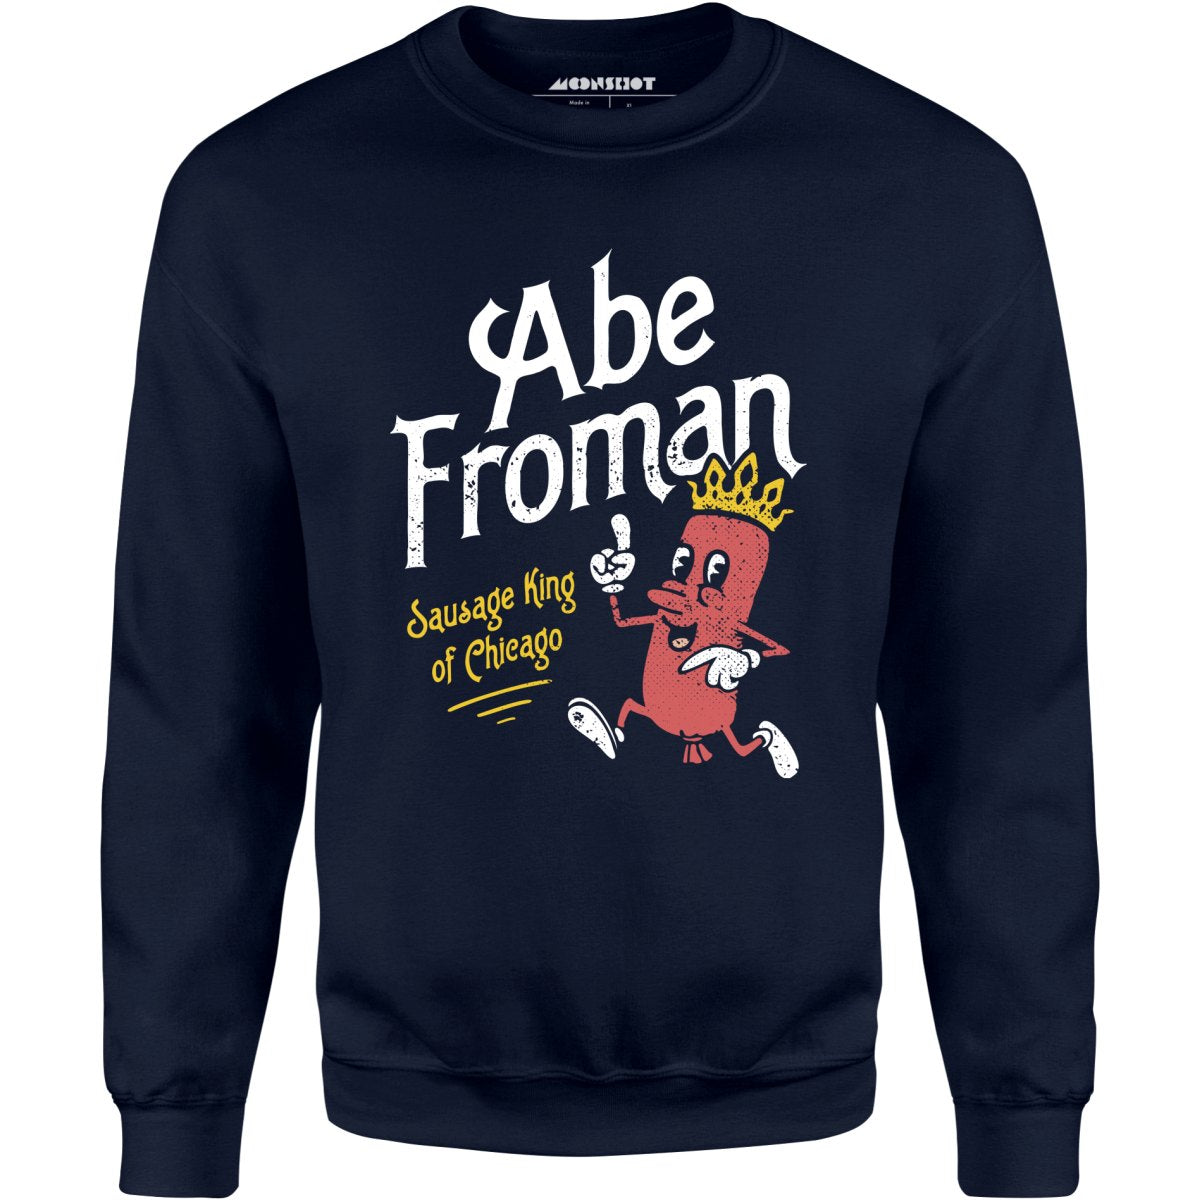 Abe Froman - Sausage King of Chicago - Unisex Sweatshirt